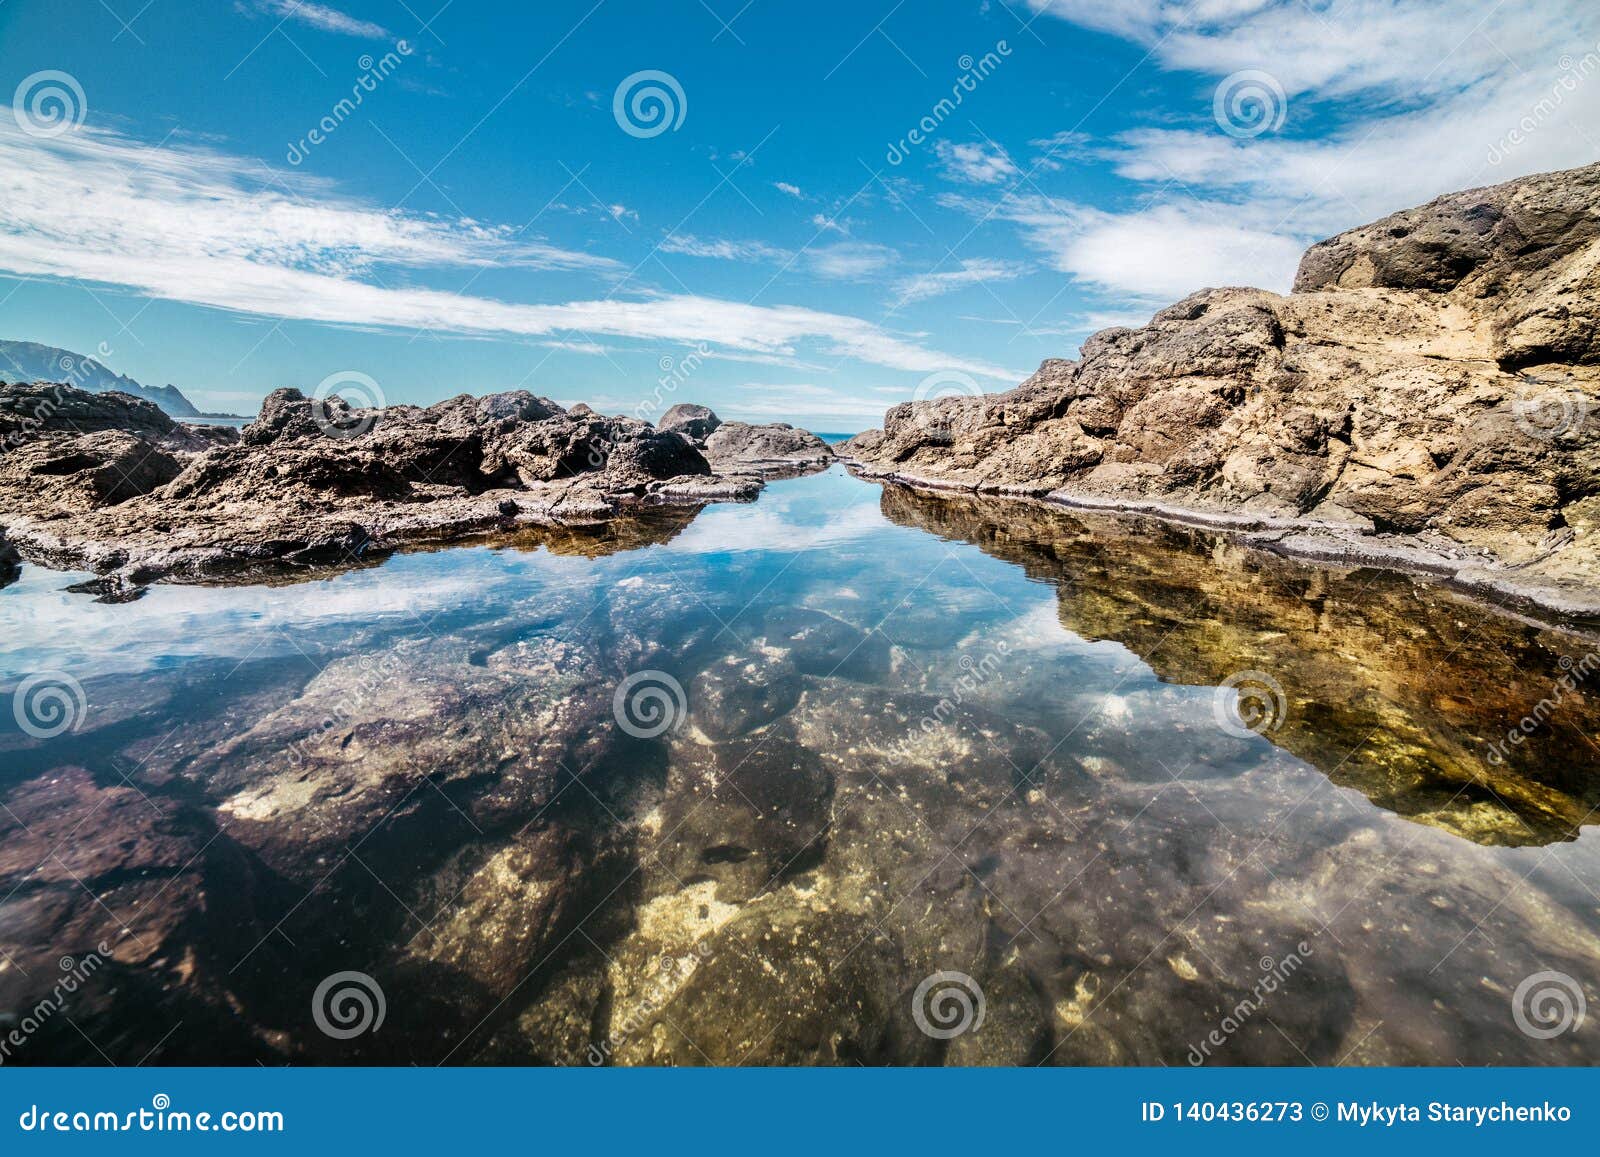 queen`s bath on kauai, hawaii island. ocean pond in rocks with sky reflection